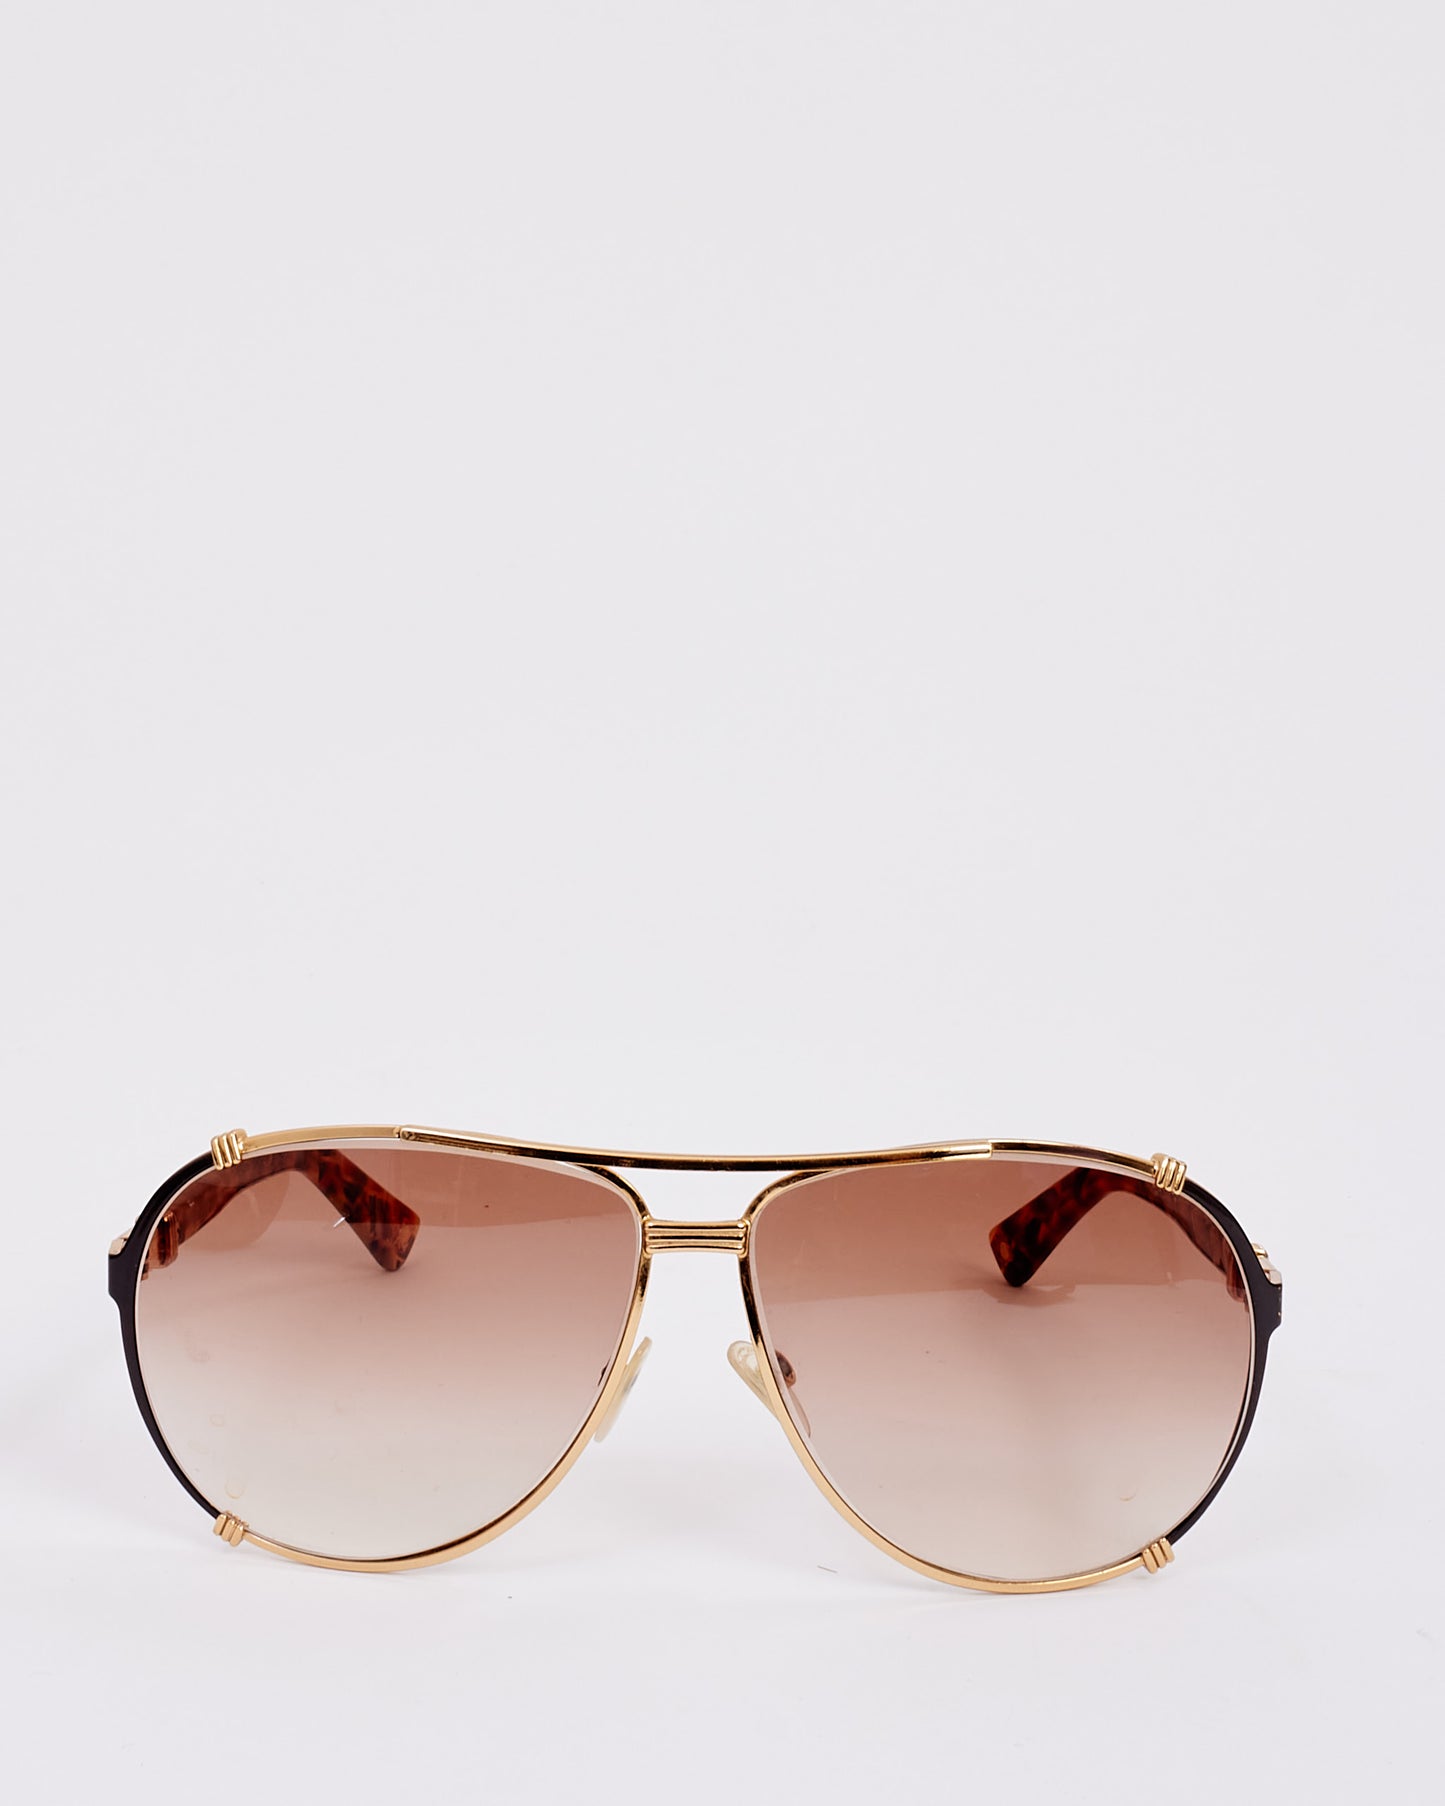 Dior Gold & Tortoise Aviator Sunglasses